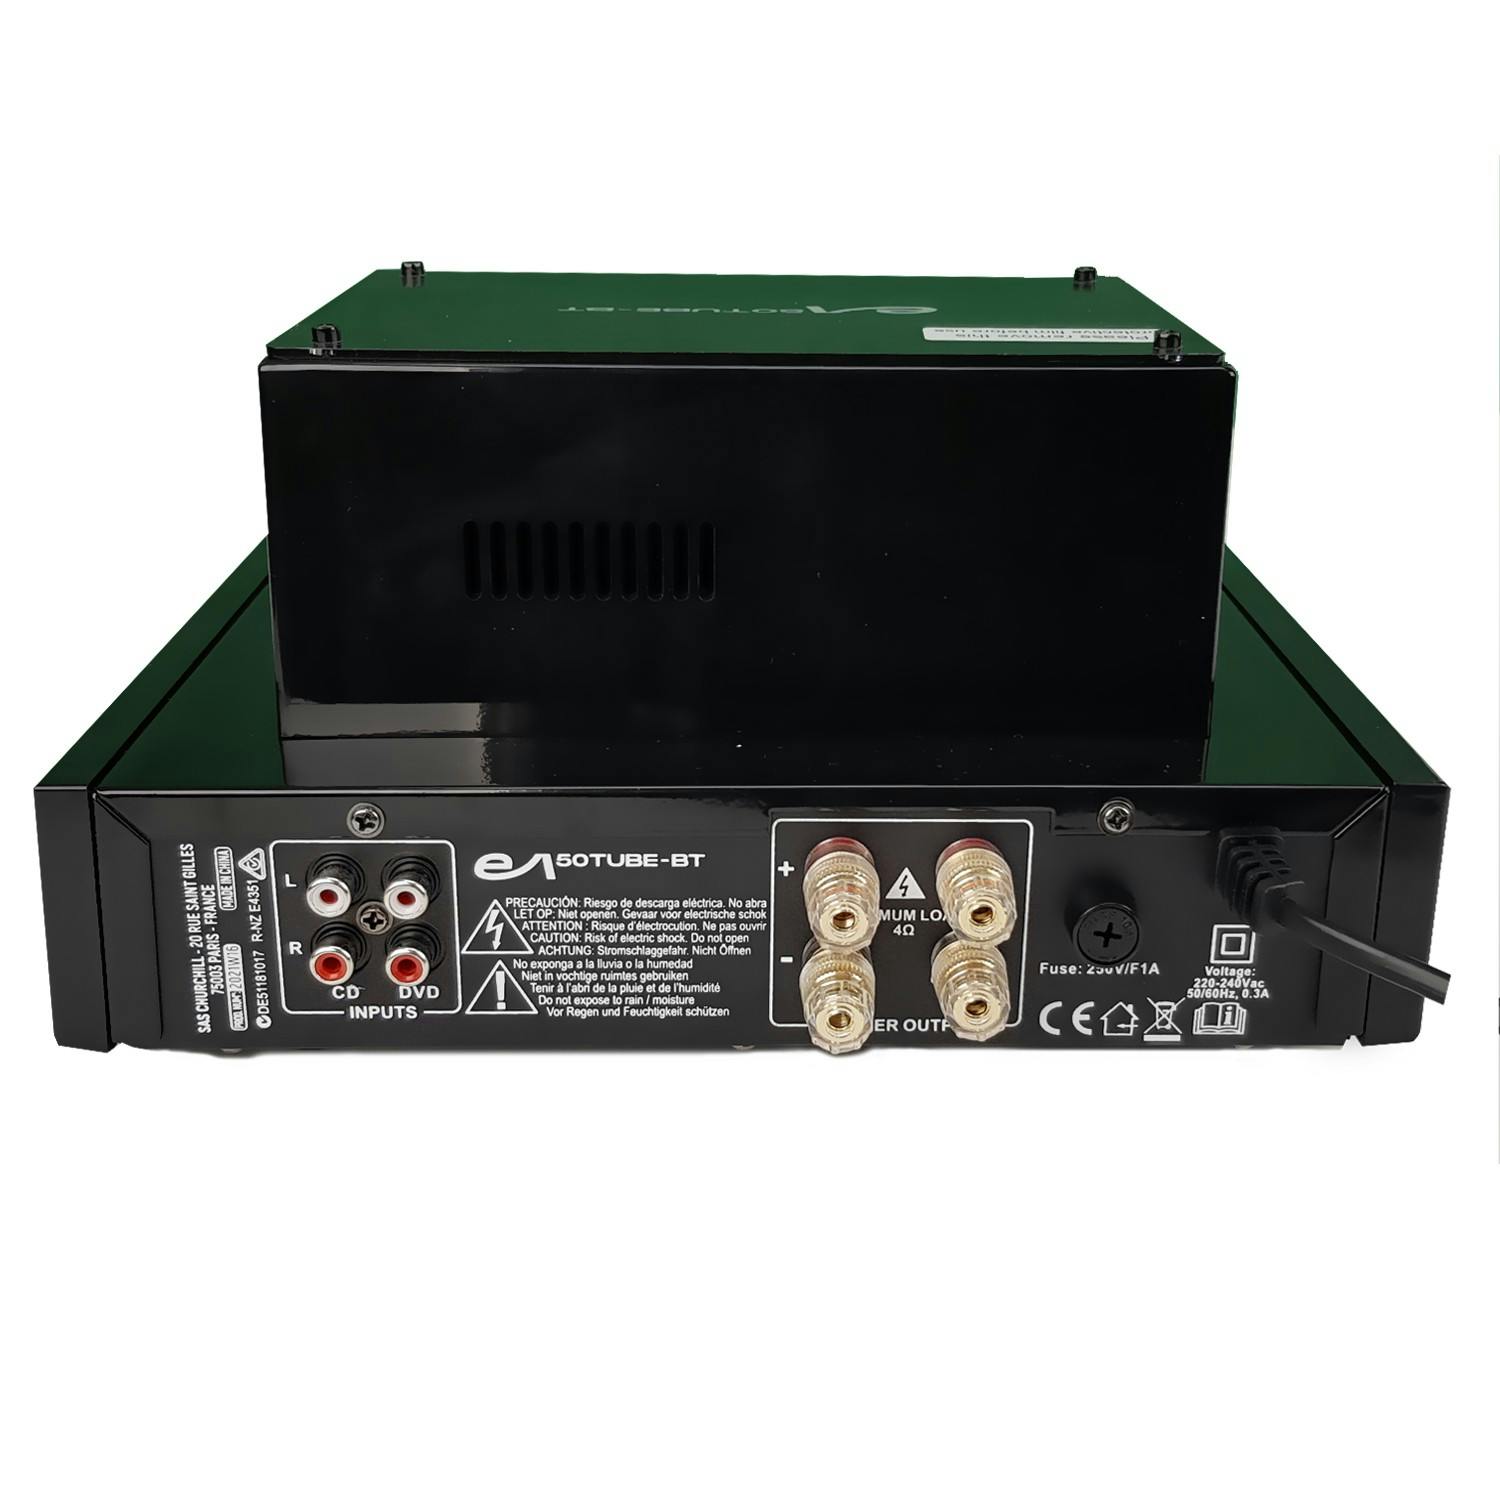 Home-Cinéma 5.1 - Evidence Acoustics, 5 enceintes 850W - Amplificateur  EA-7360, USB SD Bluetooth Radio, Microphone